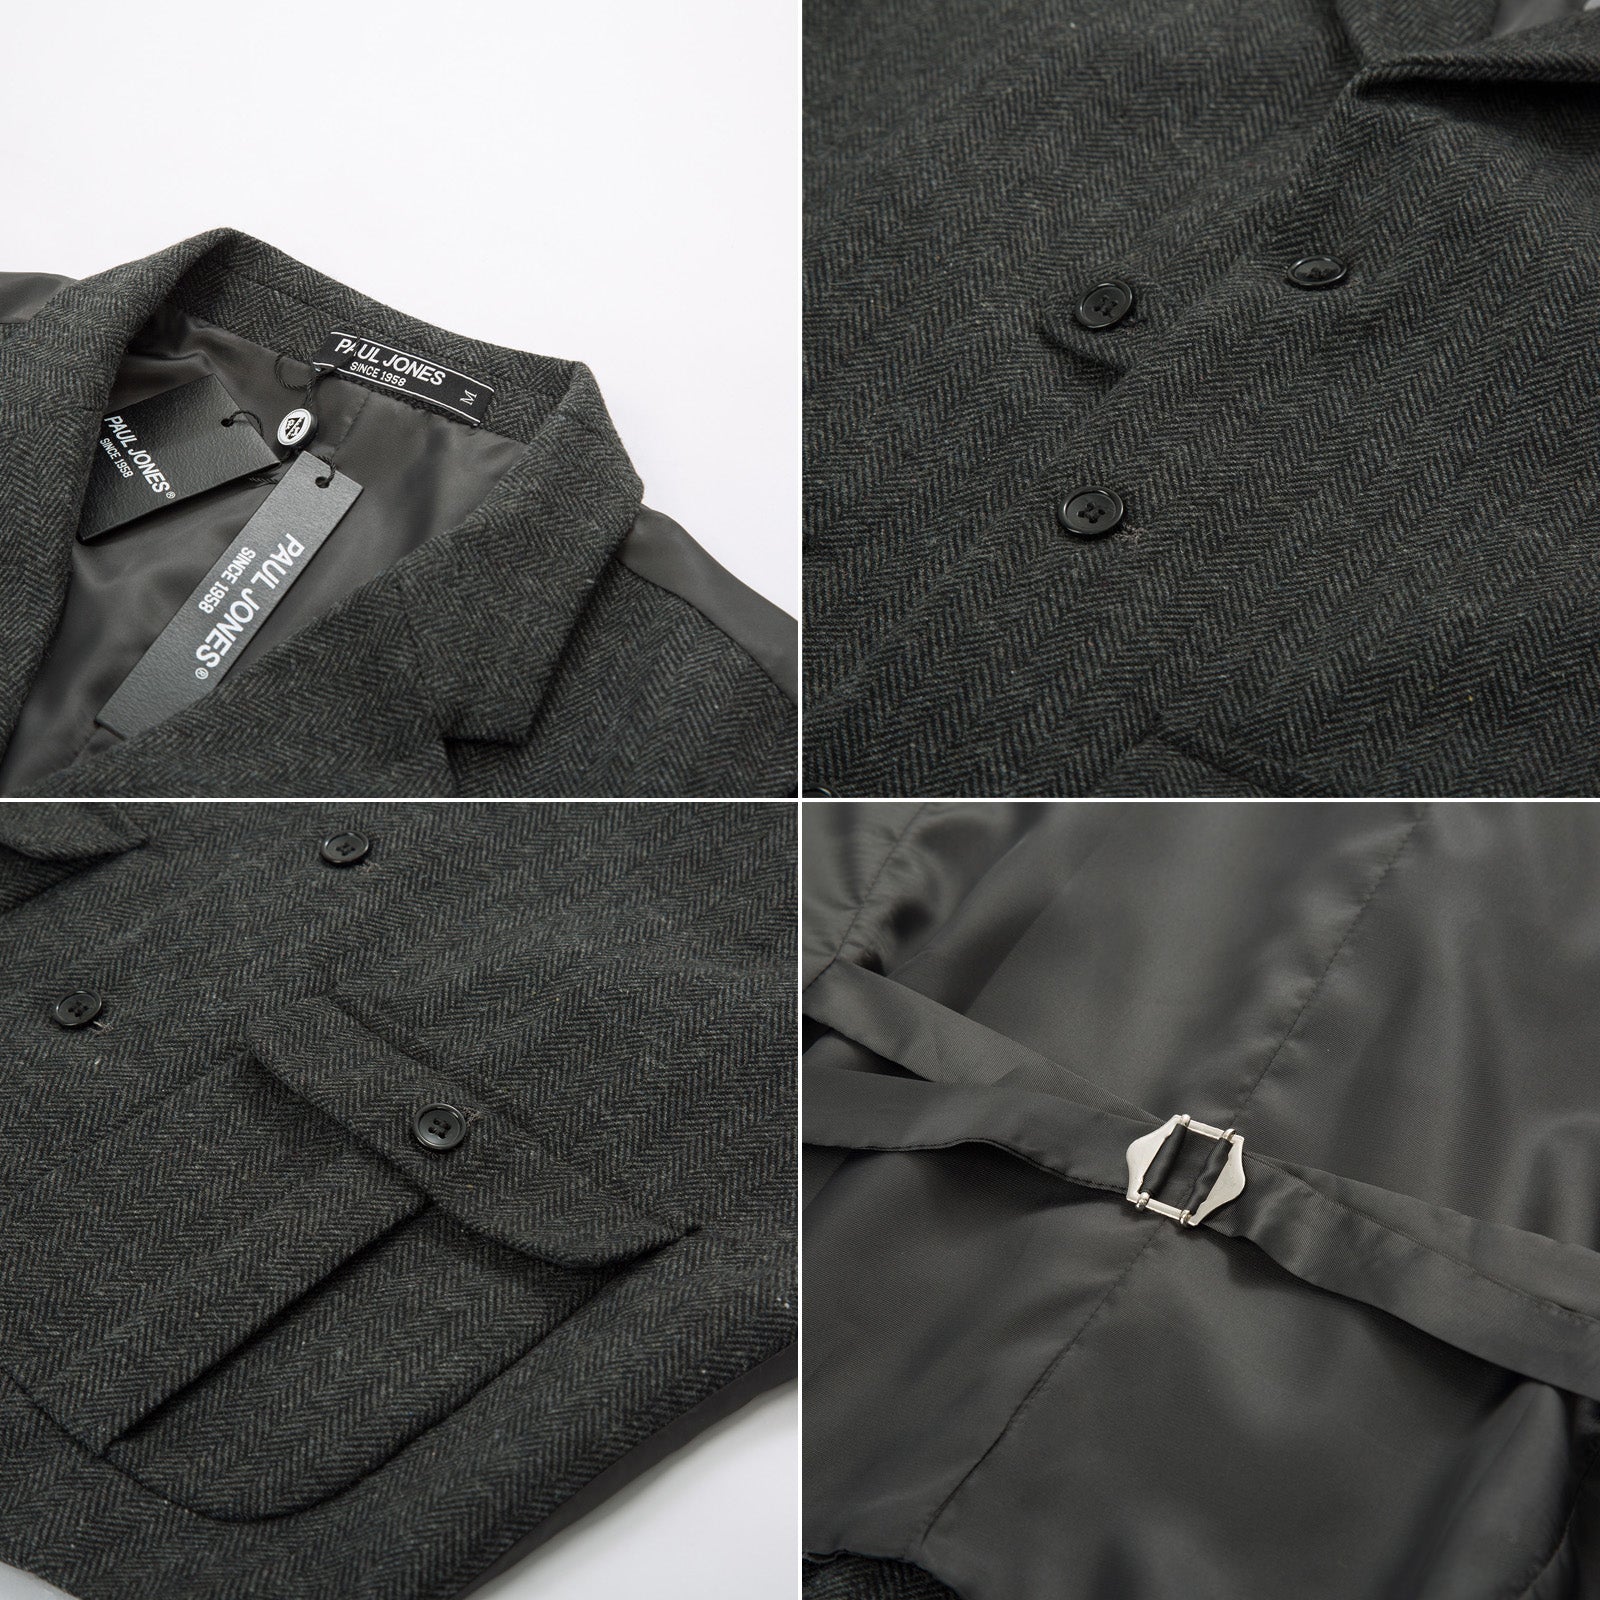 Men's Casual Shirt Vest Waistcoat Notch Lapel With Pockets | PJ Paul ...